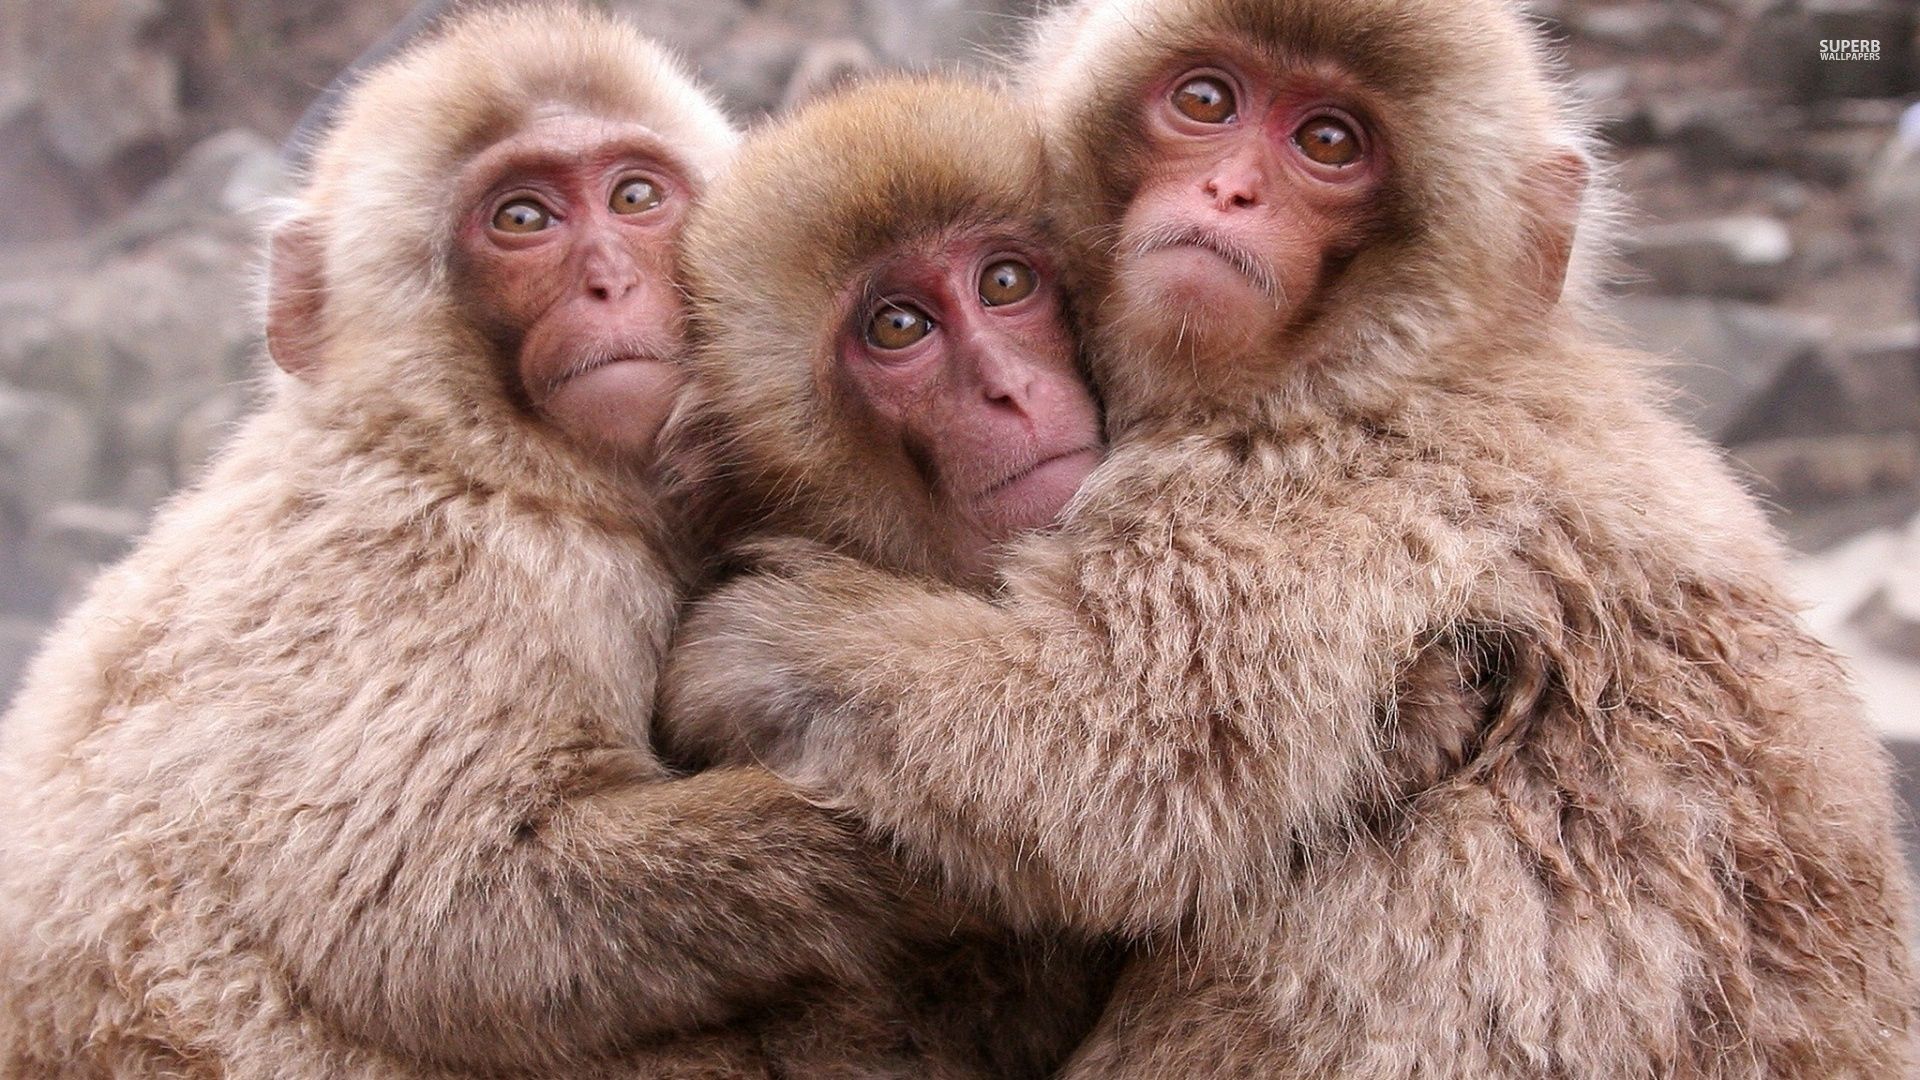 Cute monkeys hugging wallpaper - Animal wallpapers - #49136